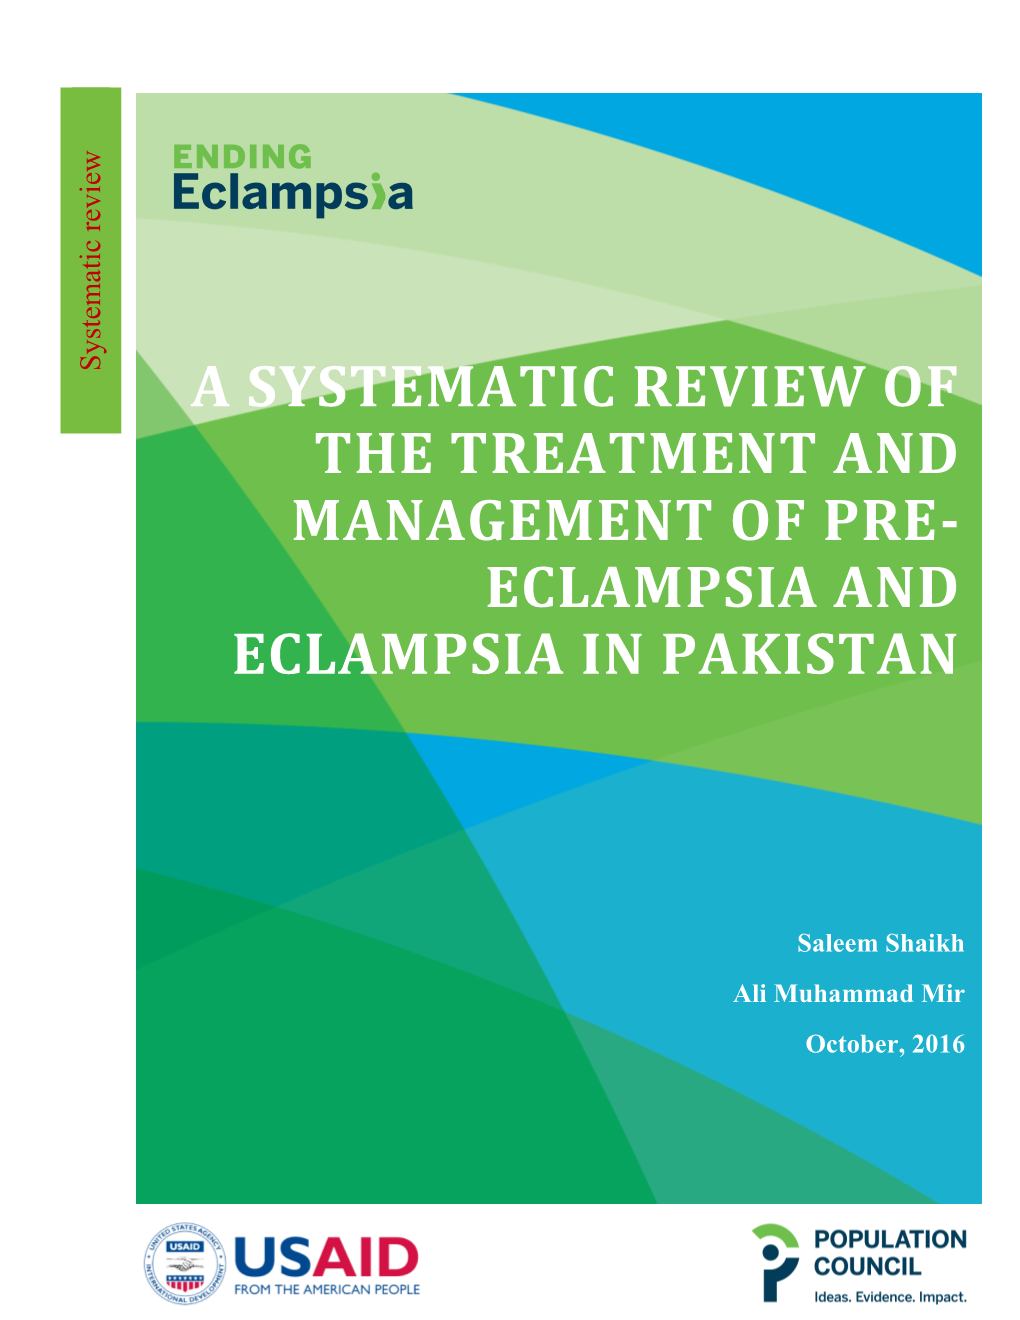 Eclampsia and Eclampsia in Pakistan